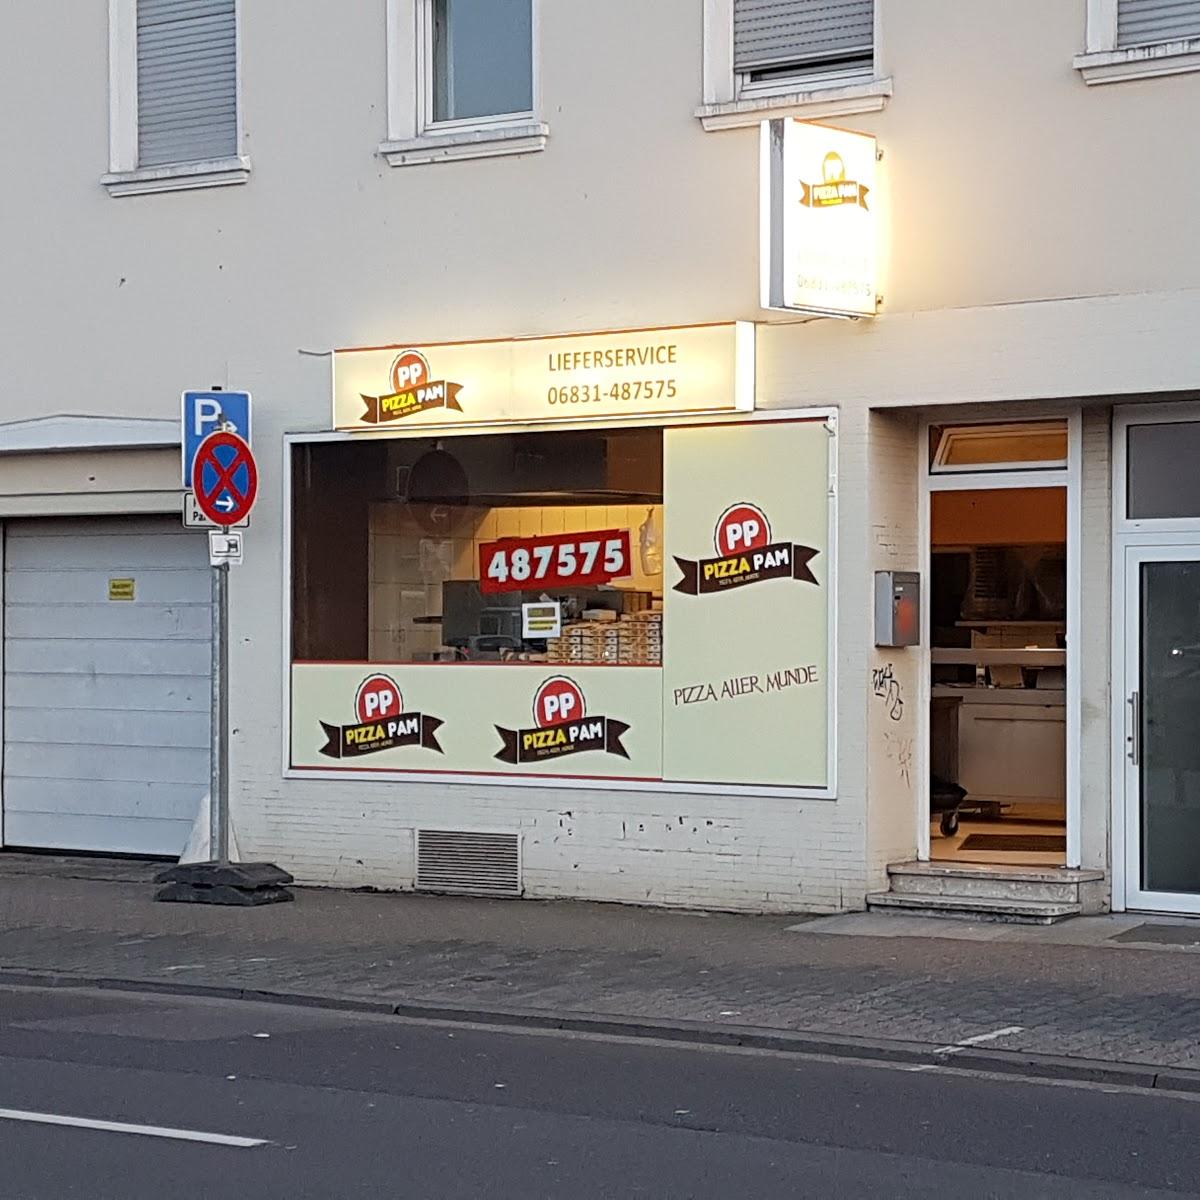 Restaurant "PIZZA PAM -" in Saarlouis